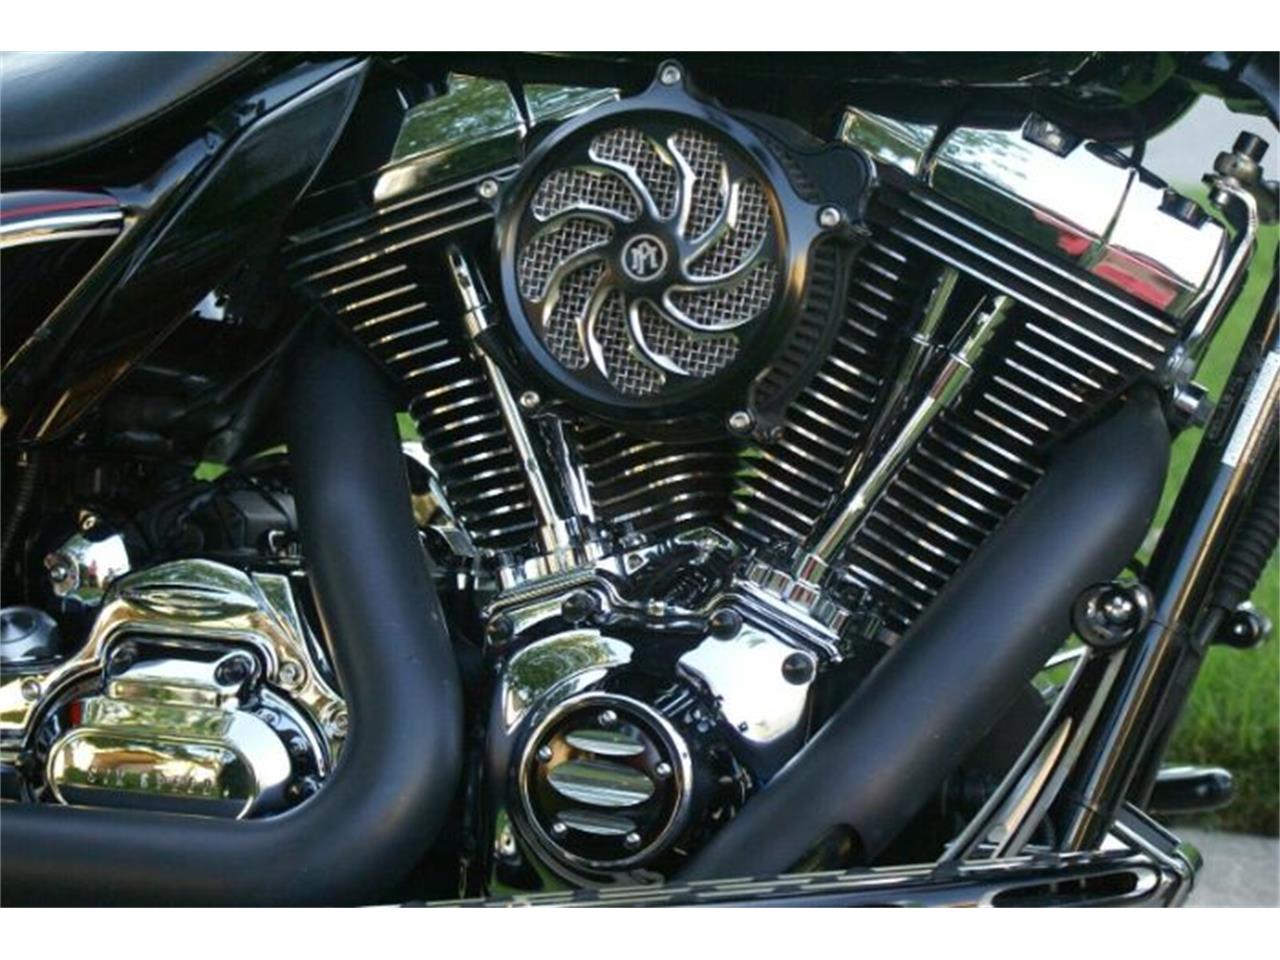 2009 Harley-Davidson Road King for sale in Cadillac, MI – photo 8